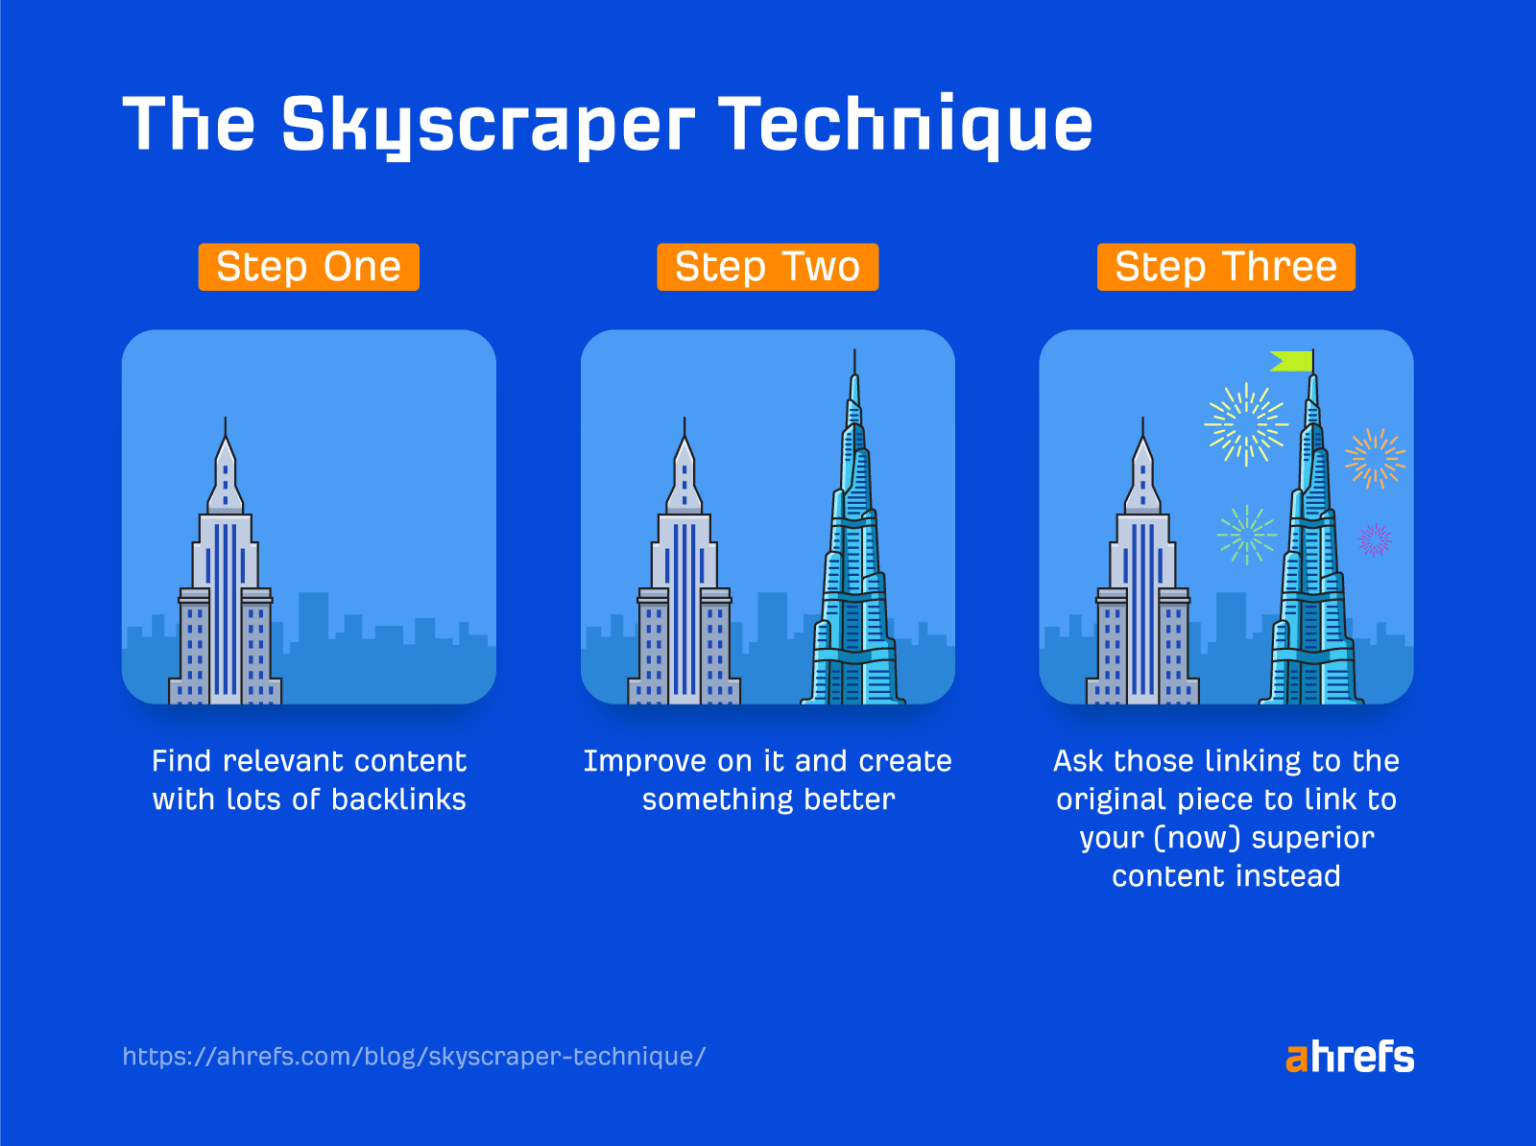 How to execute the Skyscraper Technique